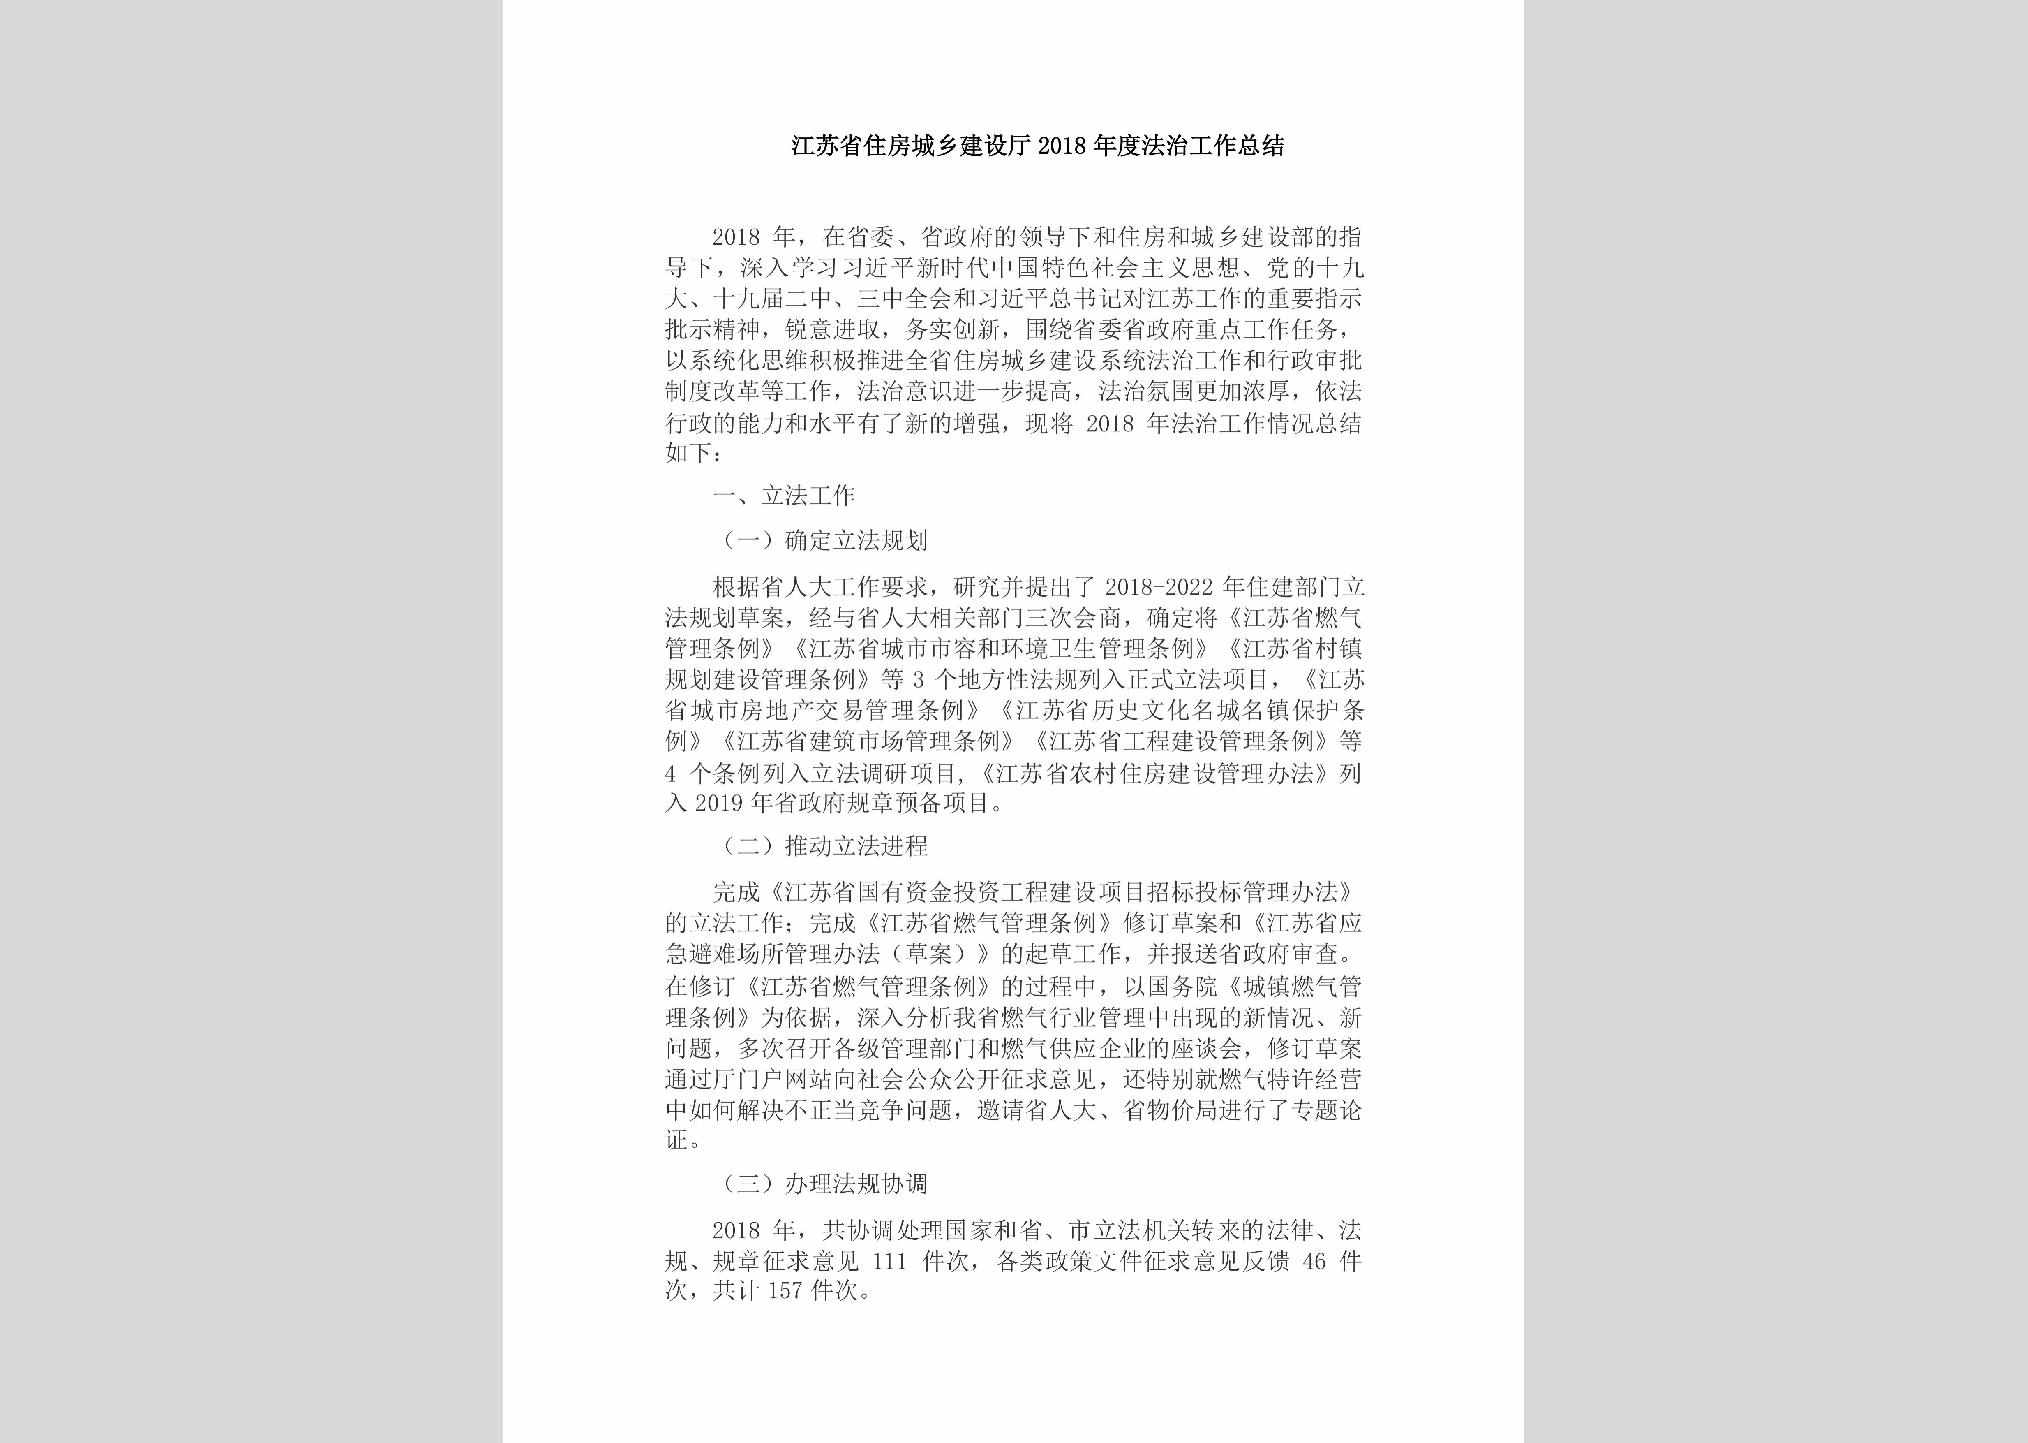 JS-NDFZGZZJ-2019：江苏省住房城乡建设厅2018年度法治工作总结